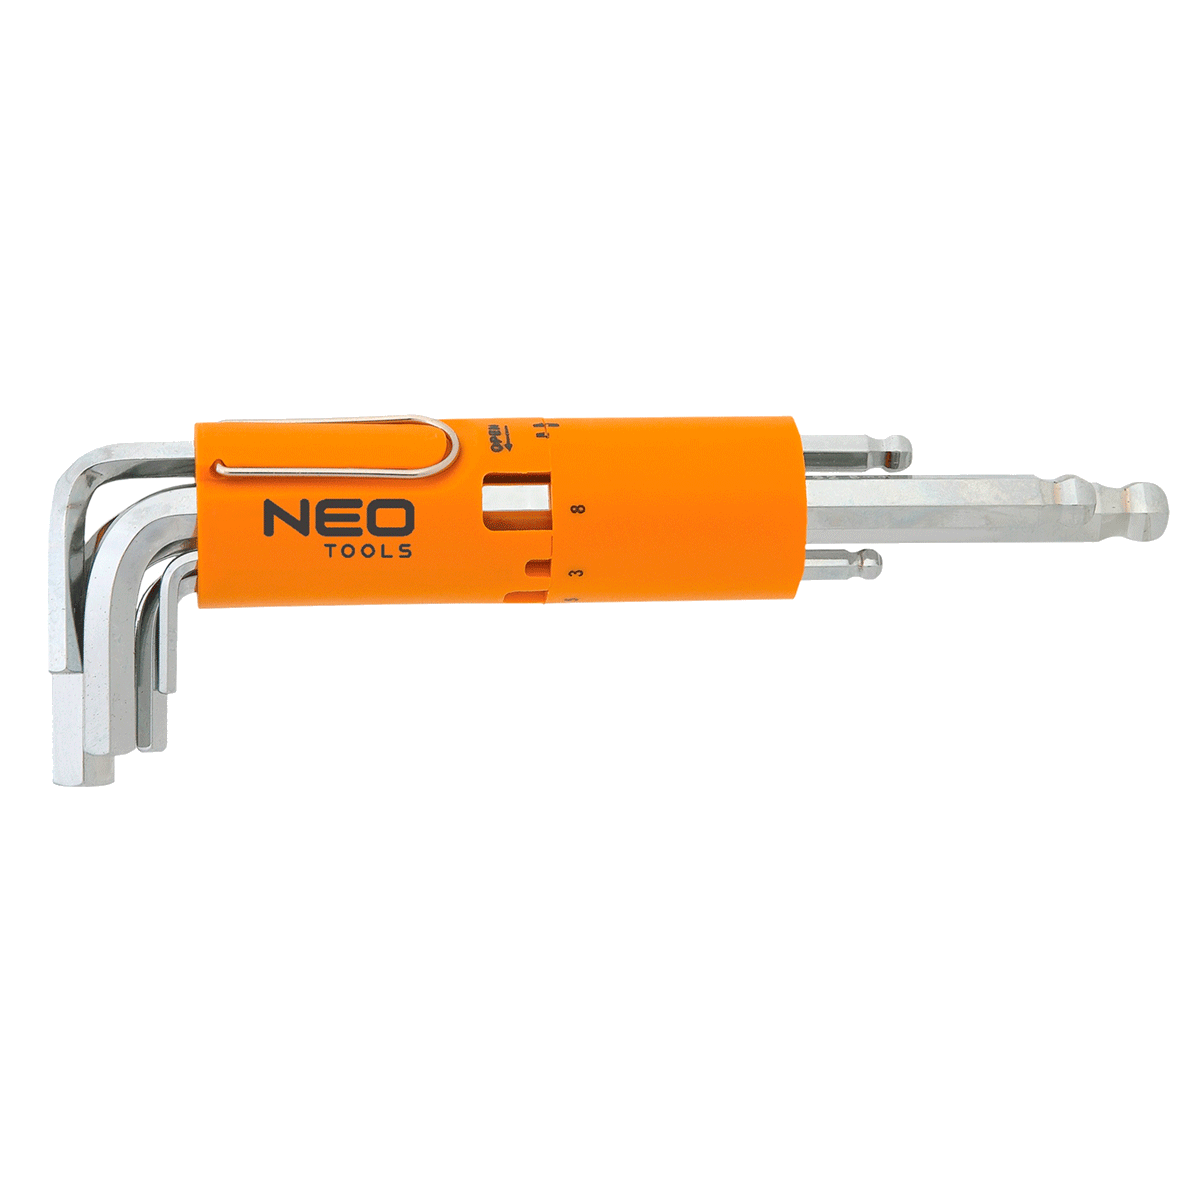 Ключи NEO шестигранные, 2.5-10 мм, набор 8 шт. (09-523)